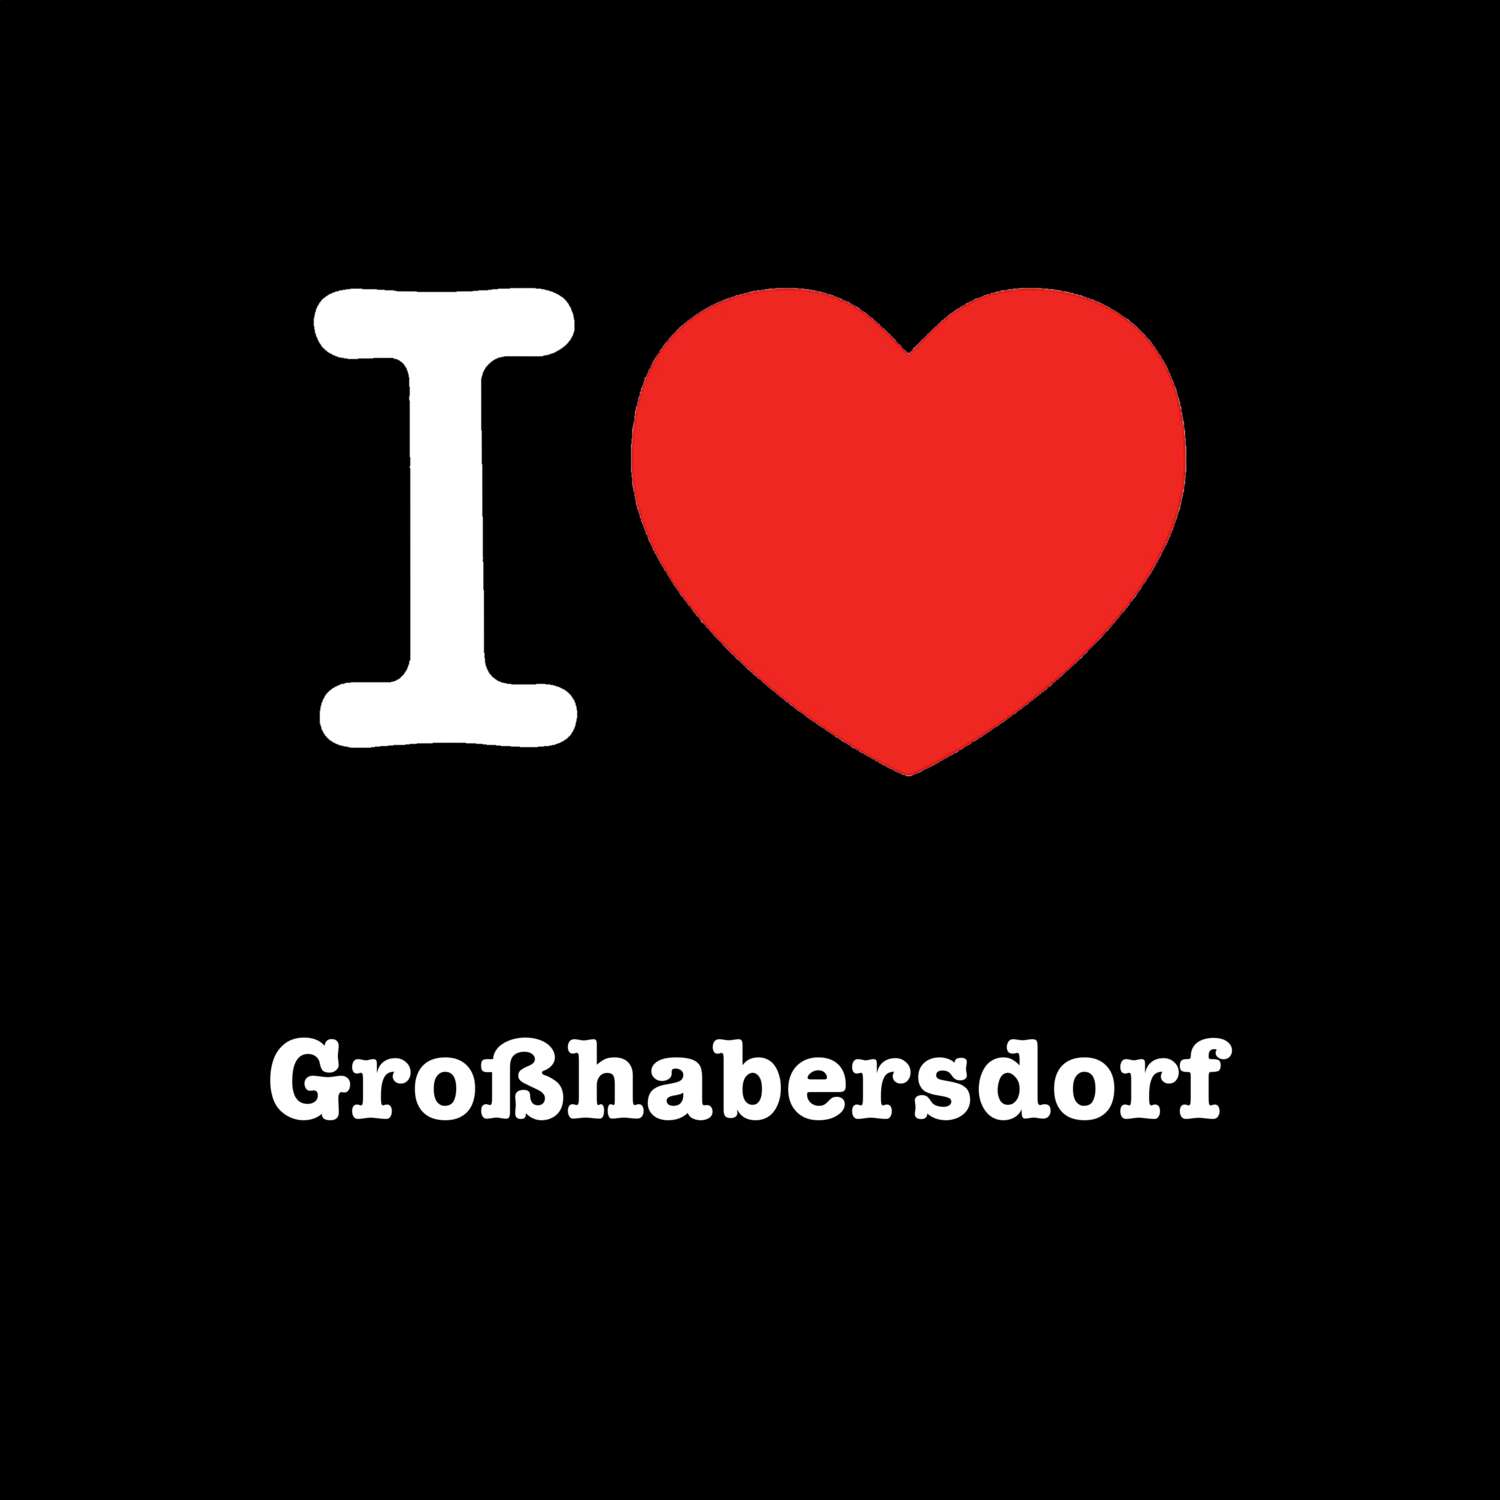 Großhabersdorf T-Shirt »I love«